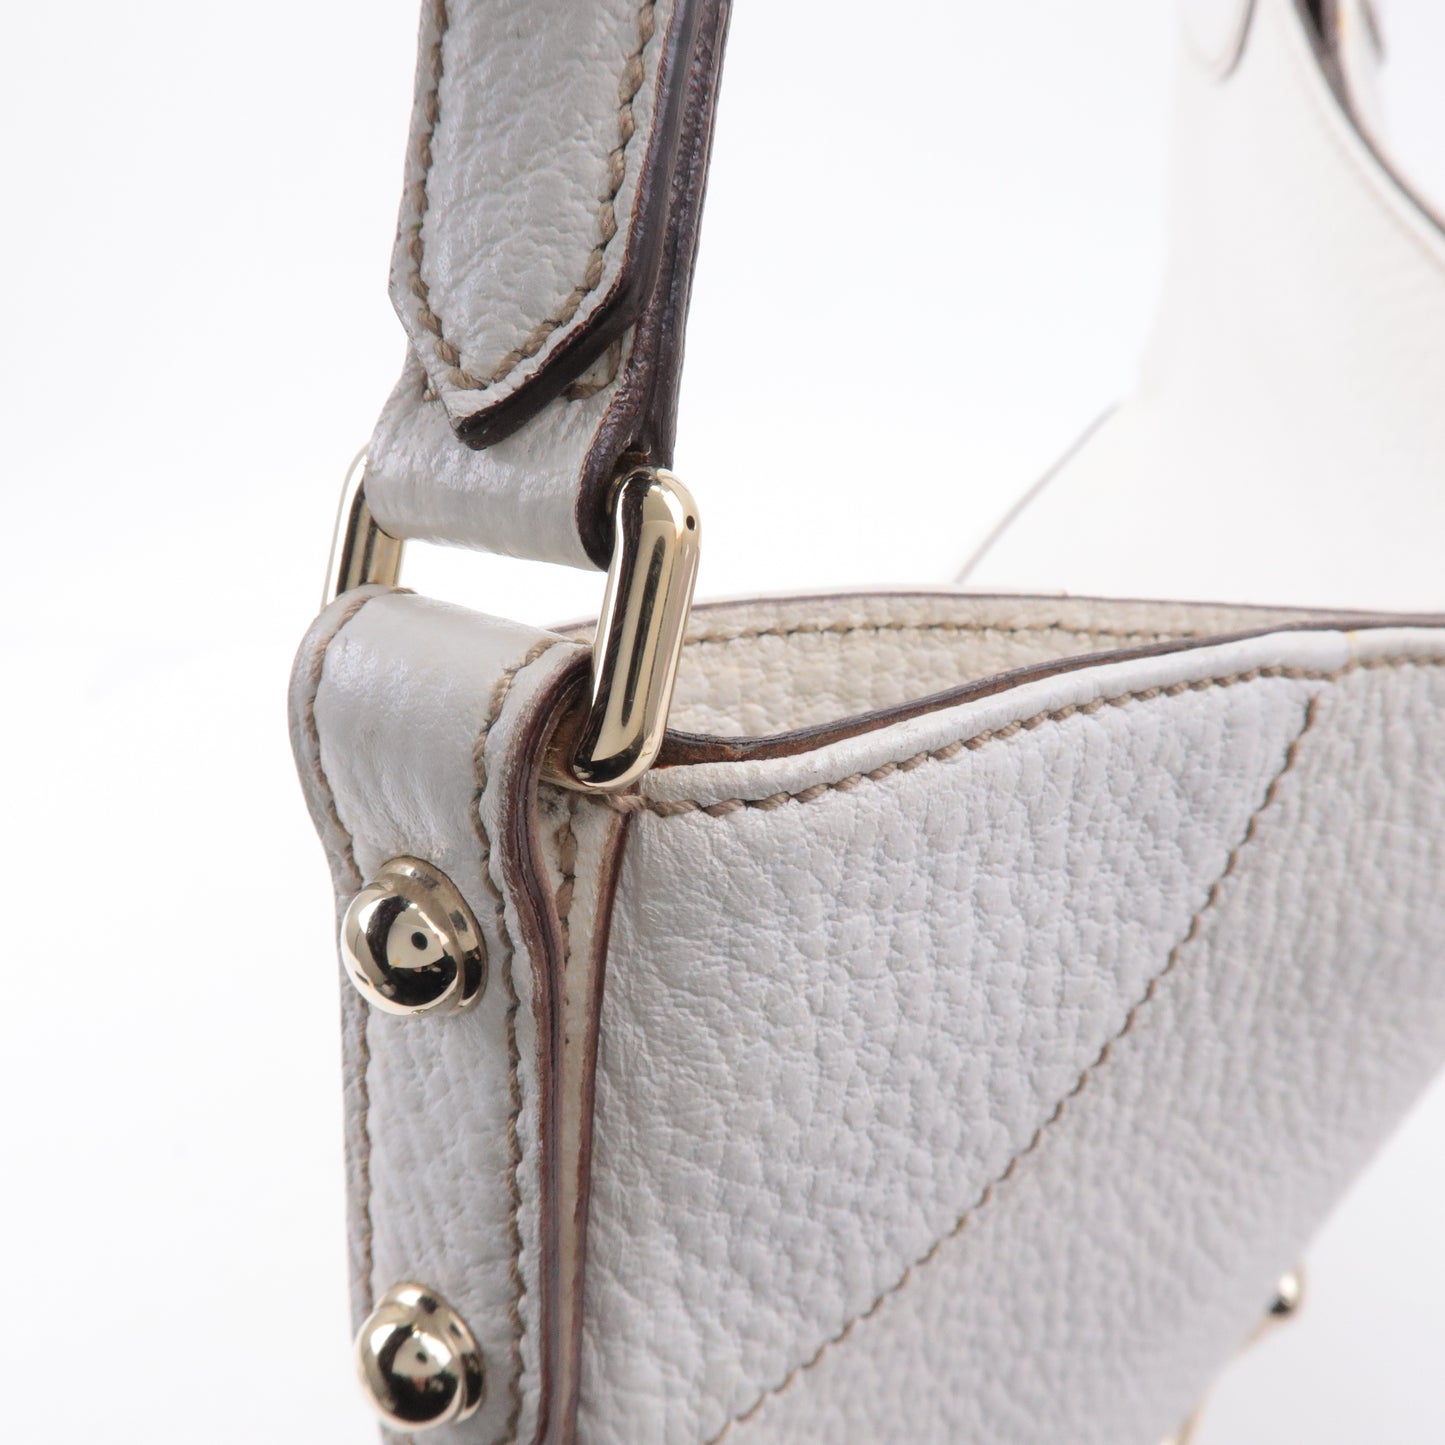 GUCCI Horsebit GG Canvas Leather Shoulder Bag White 137386